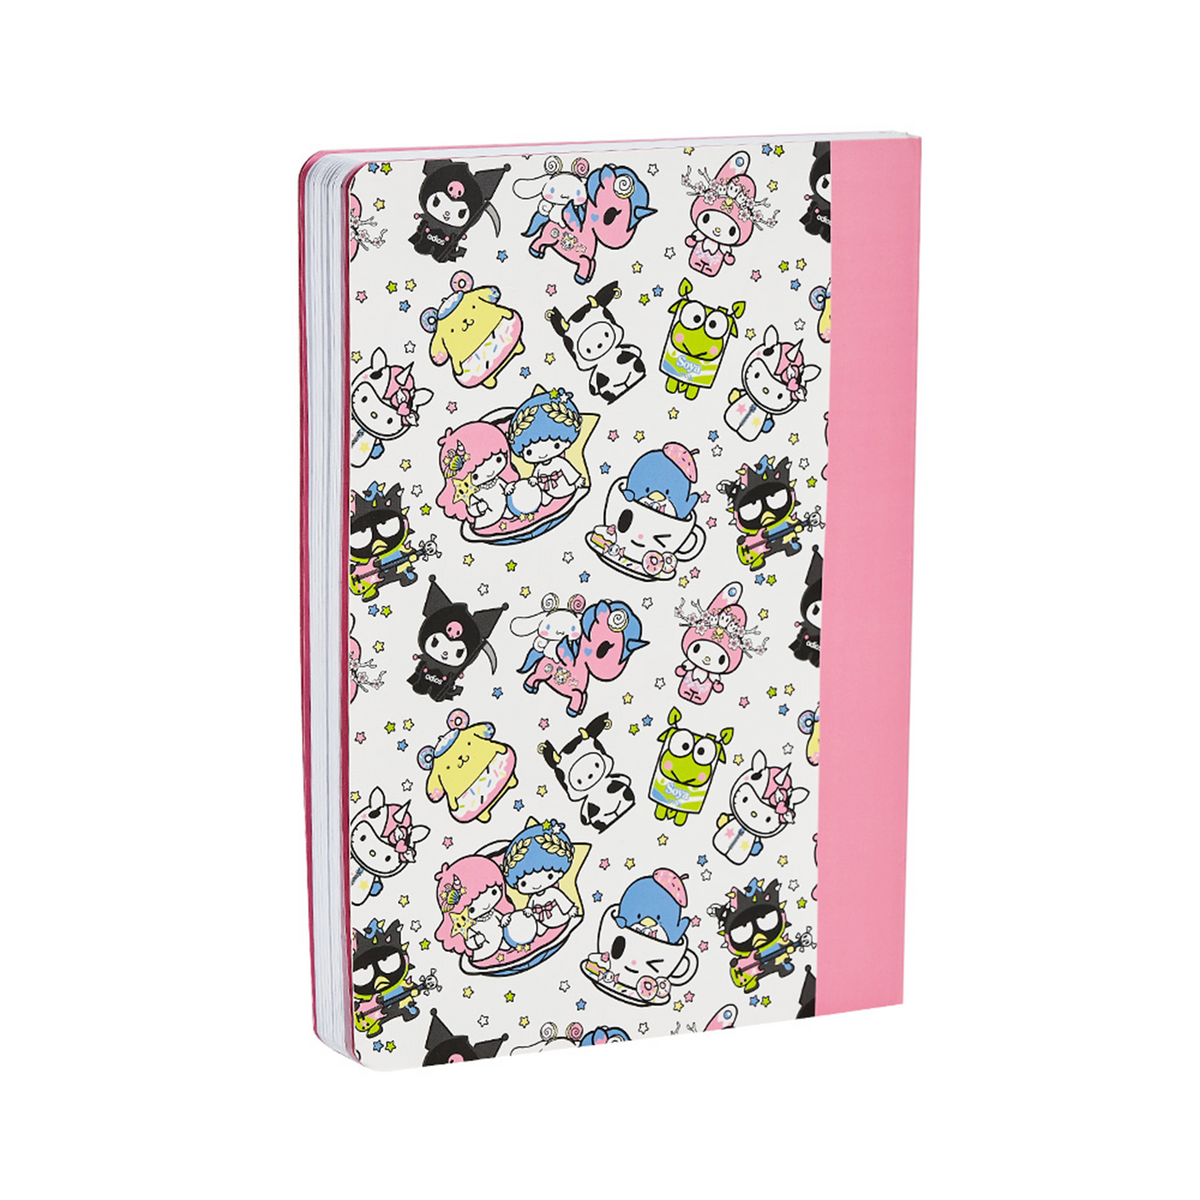 Tokidoki x Hello Kitty and Friends Notebook Stationery TOKIDOKI   